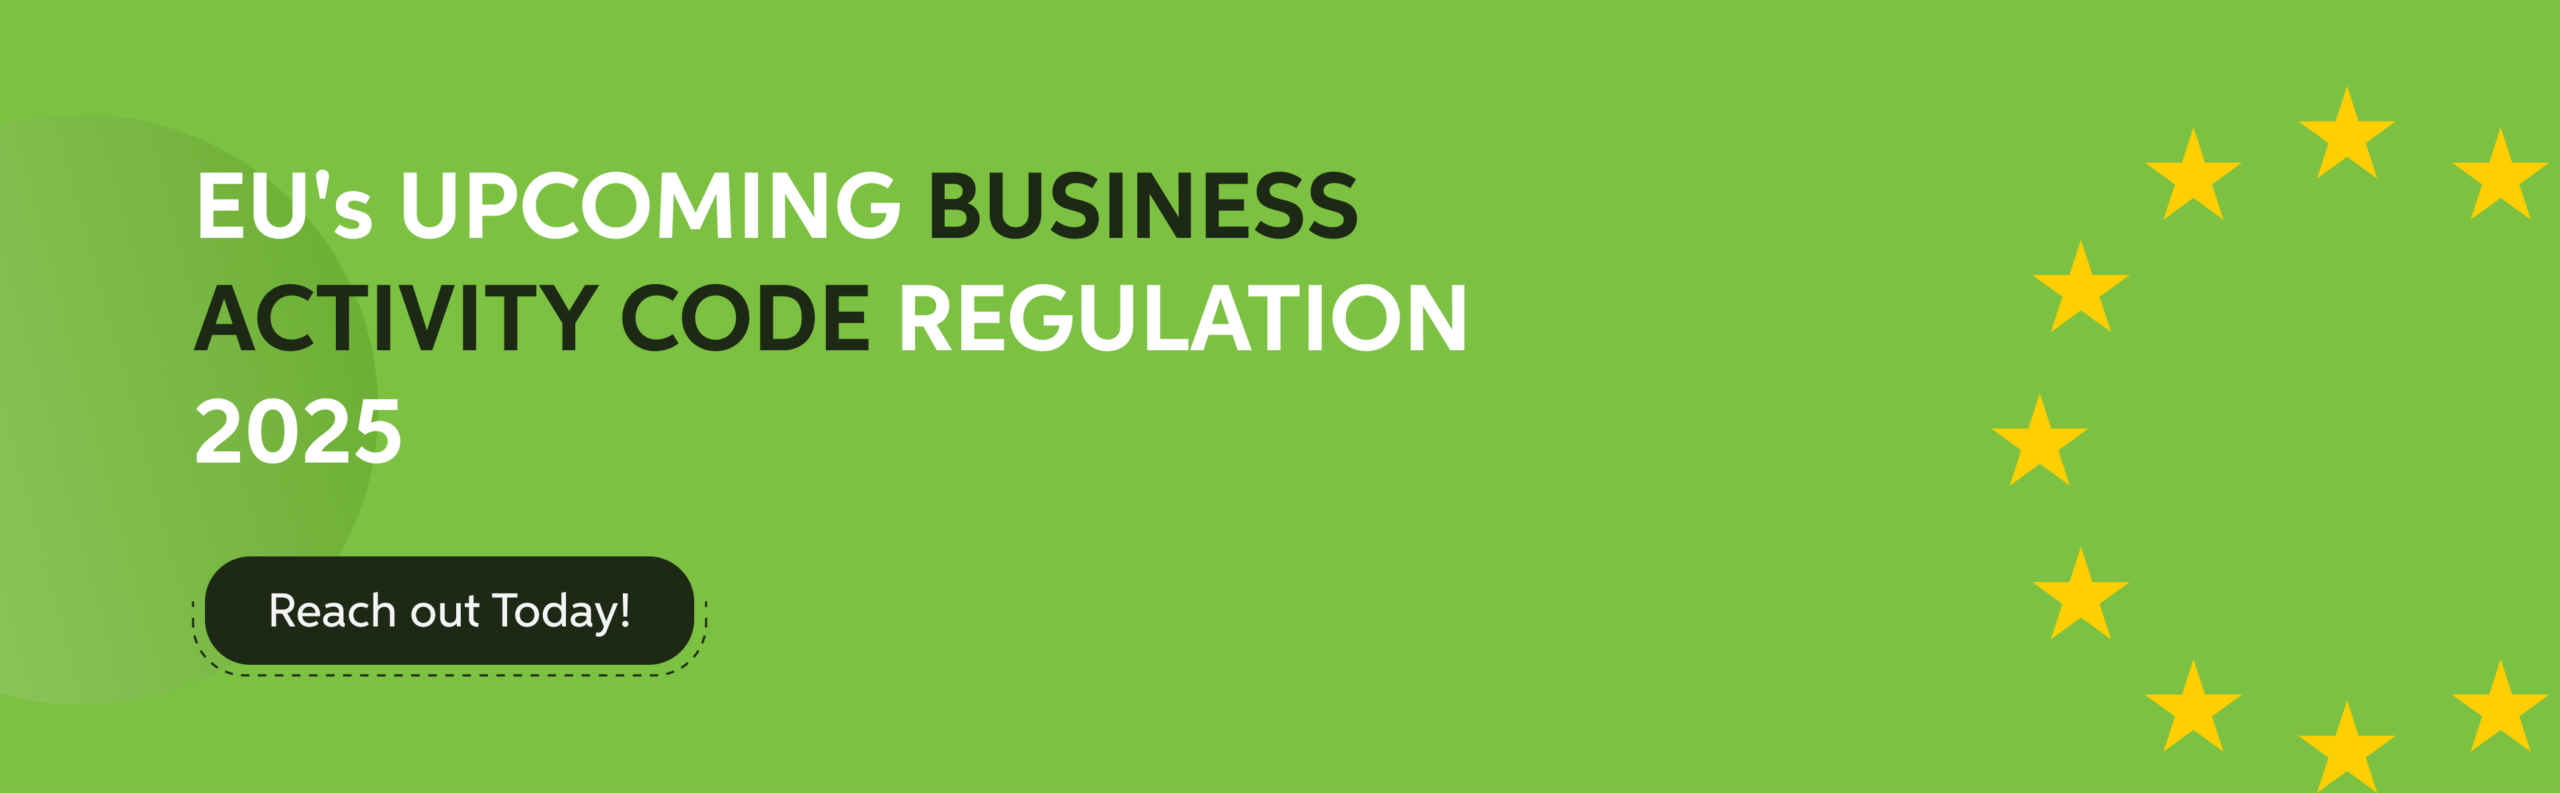 EU Business Activity Code Regulations